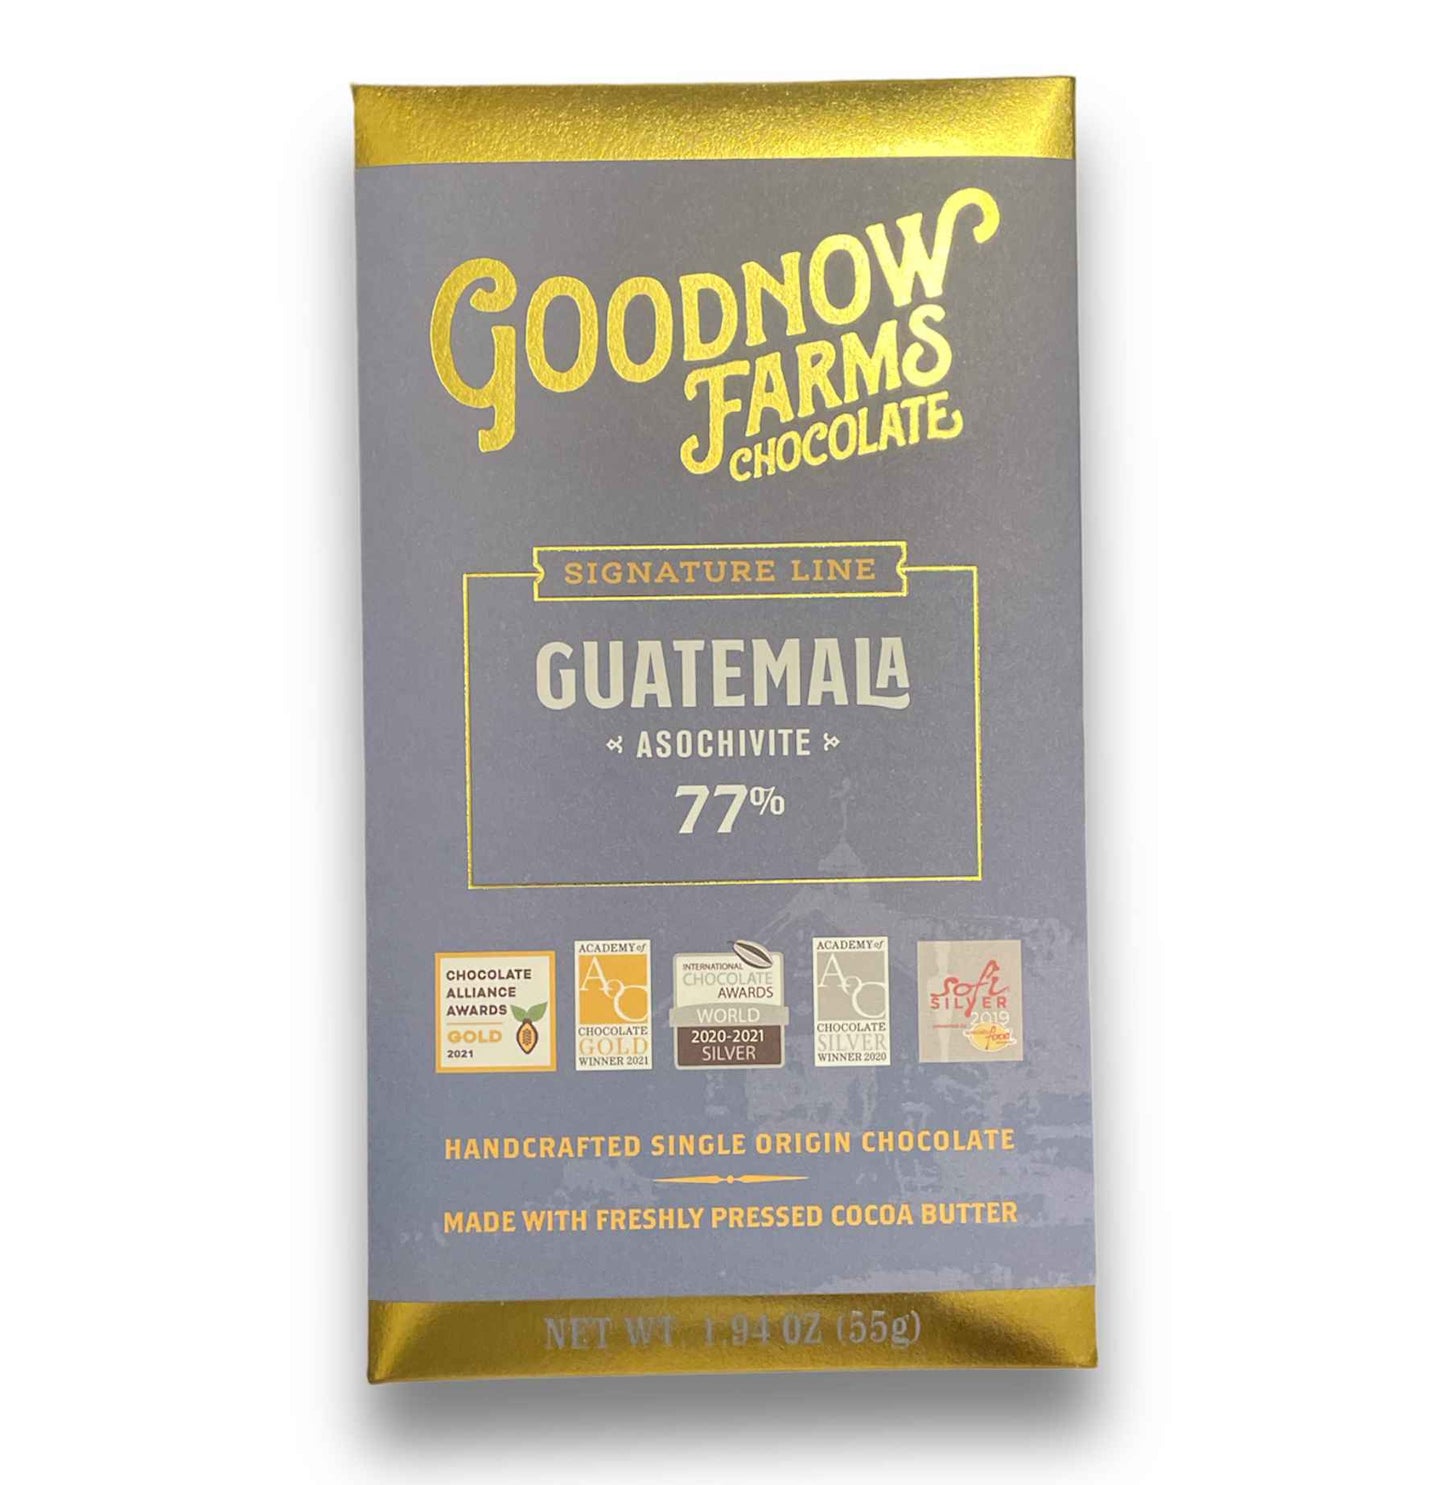 Goodnow Farms Dark Chocolate - Asochivite, Guatemala 77%